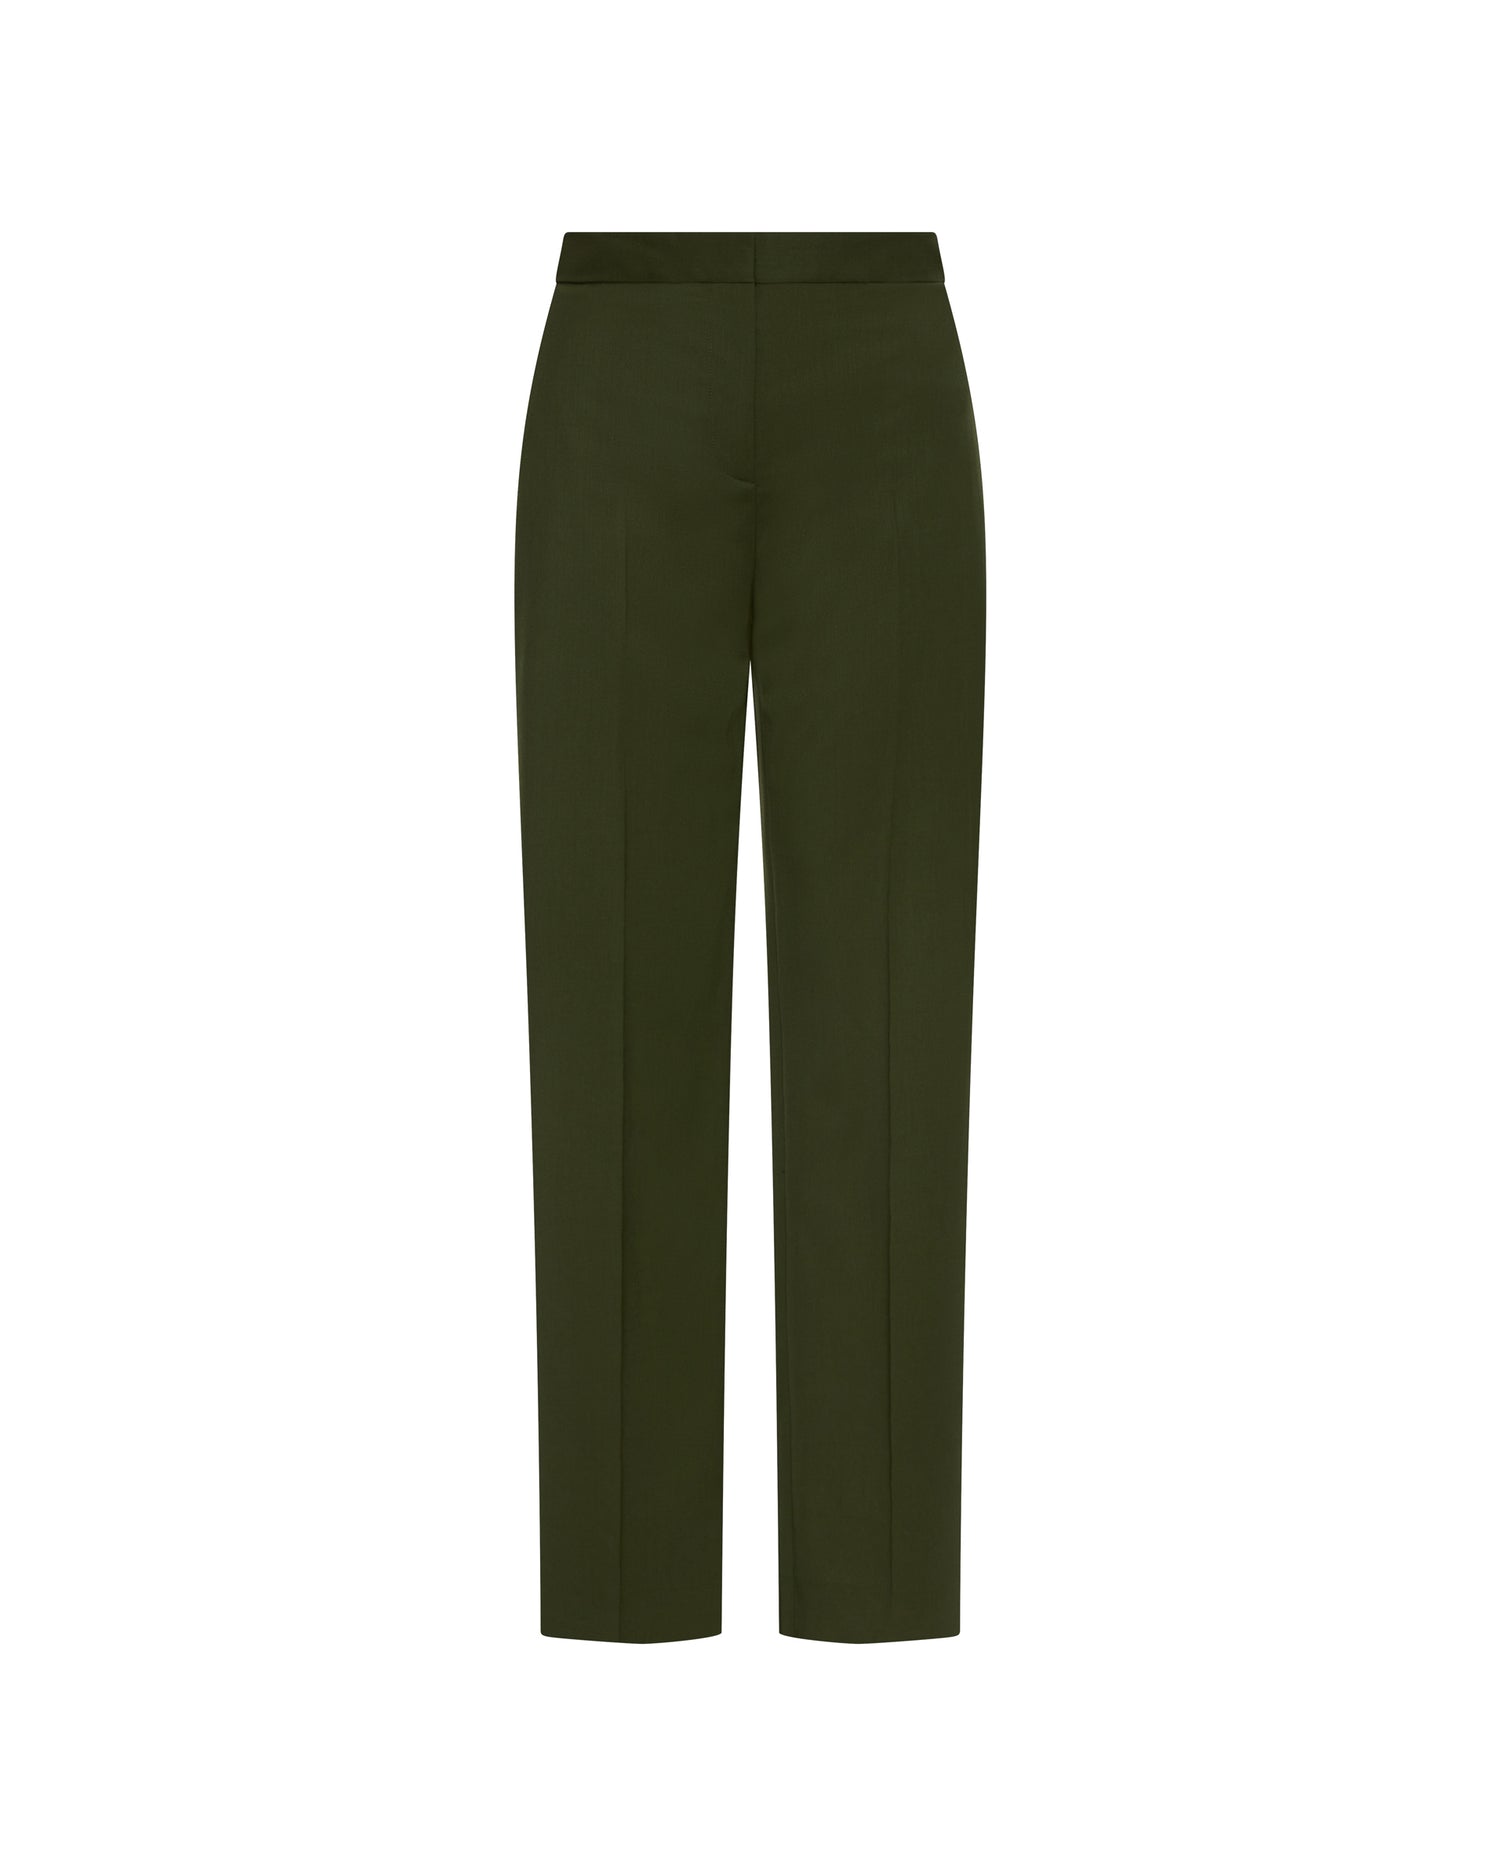 Green Wool Pants, Suspender Pants, Long Wool Pants, Womens Pants With  Pockets, Wide Leg Pants, Vintage Wool Pants, Autumn Winter Pants 2068 -   Canada